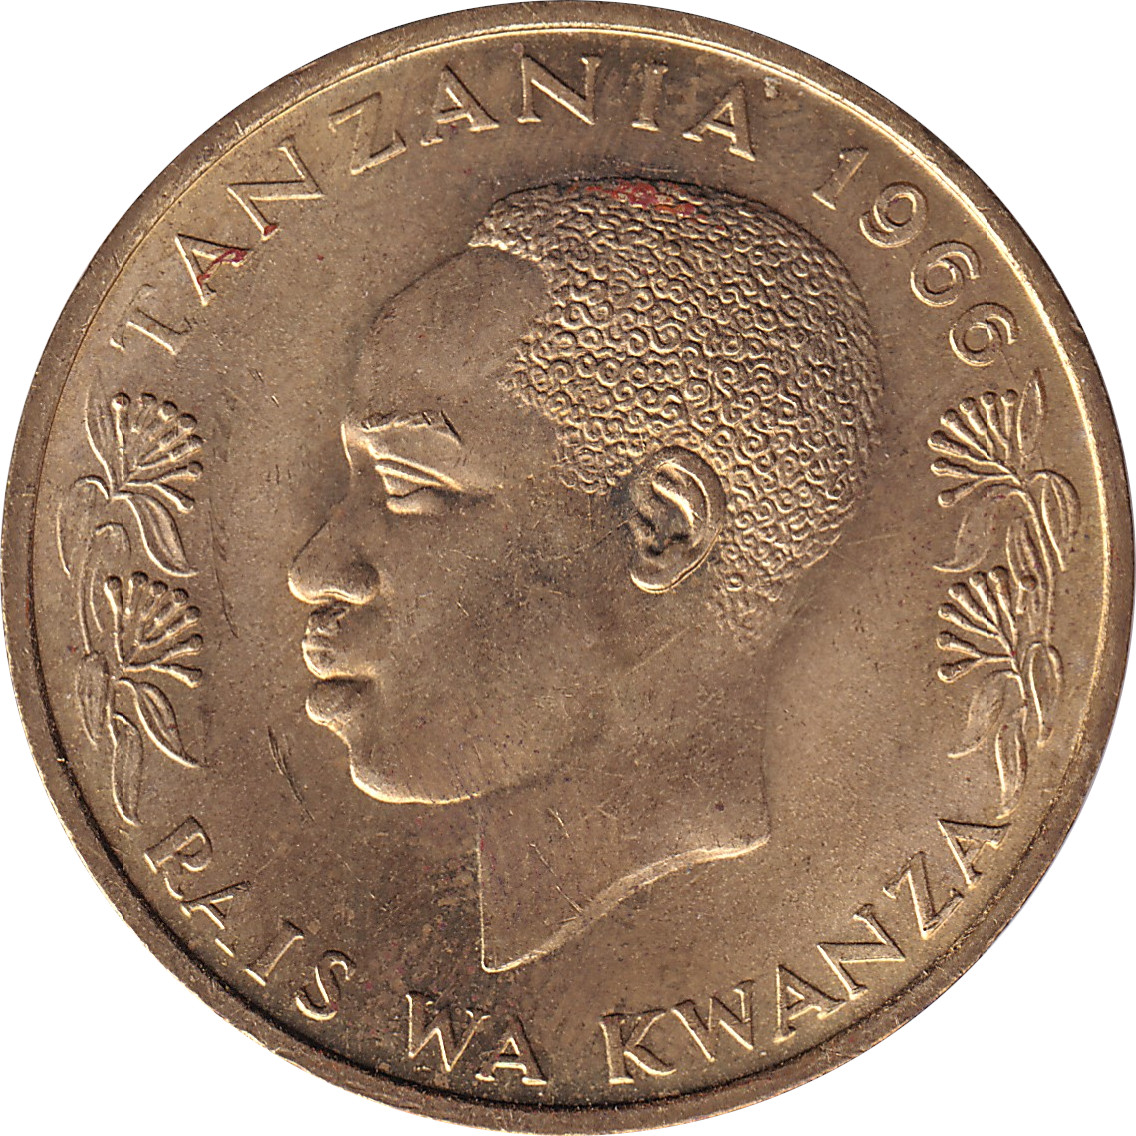 20 senti - President J.K. Nyerere